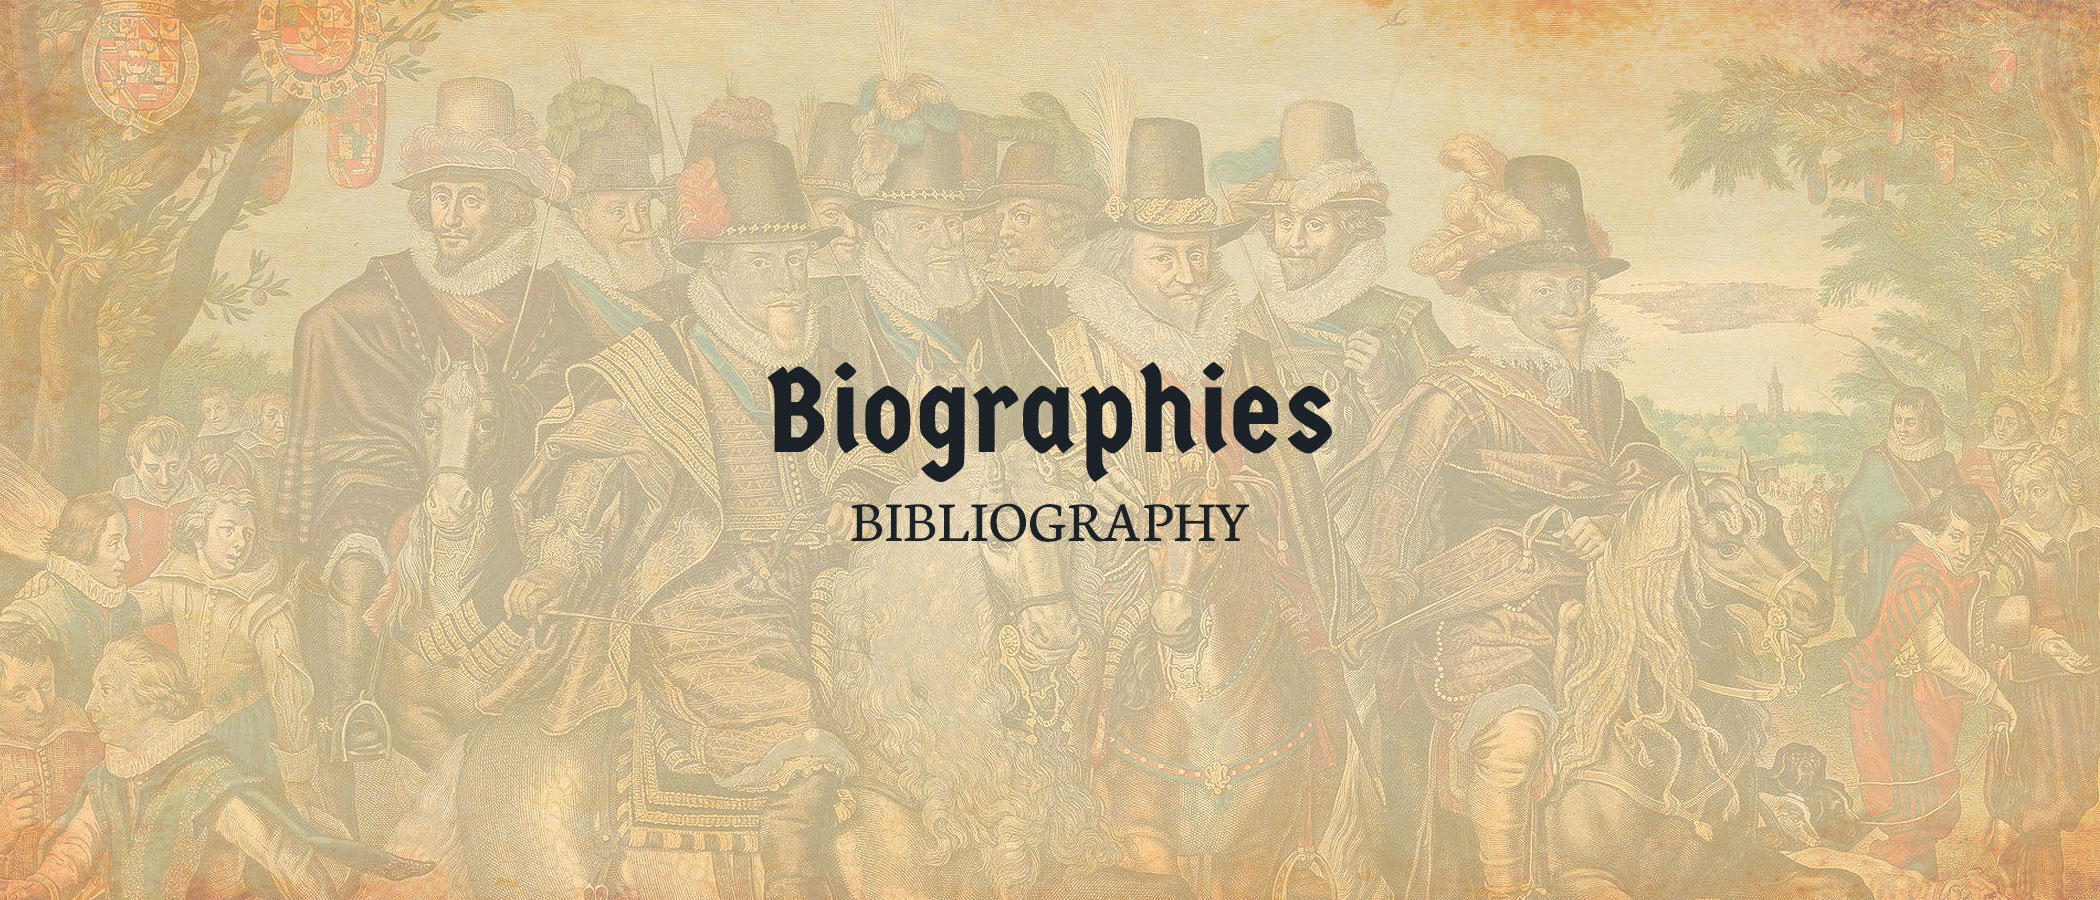 Bibliography 09: Biographies